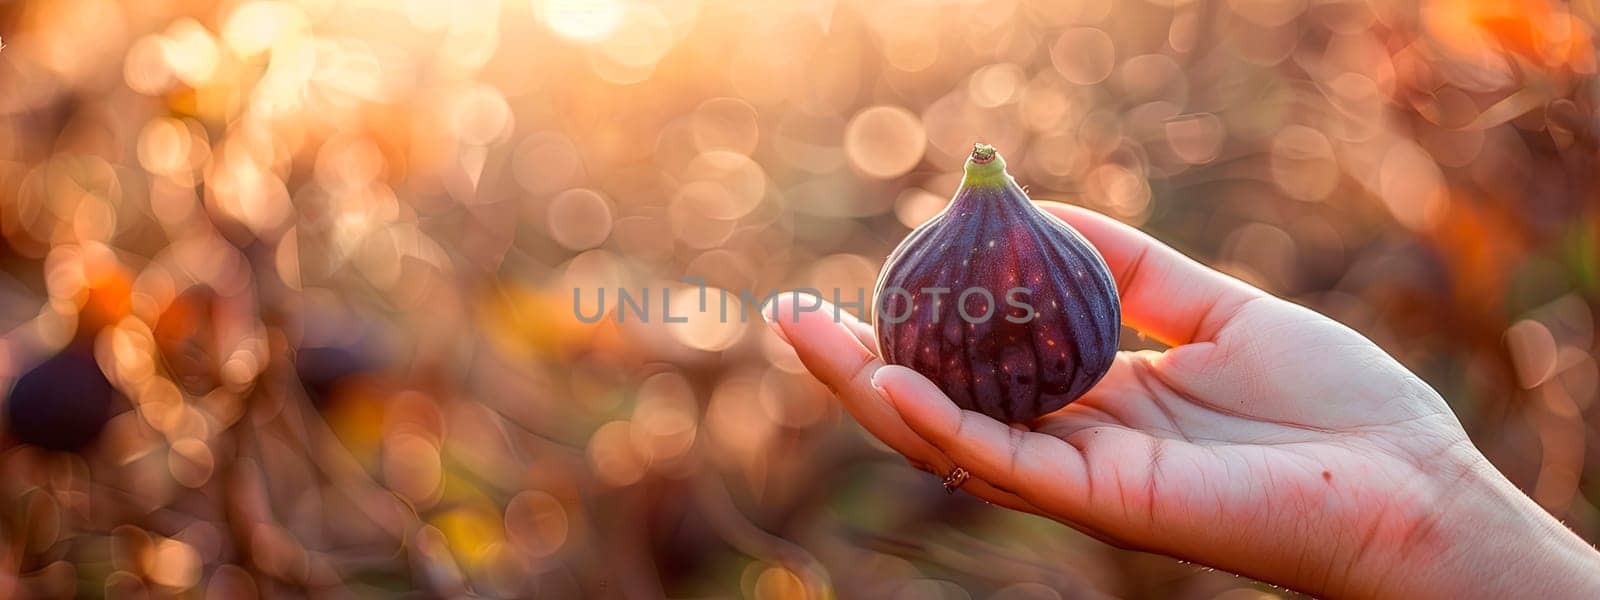 figs in hands in the garden. selective focus. by yanadjana